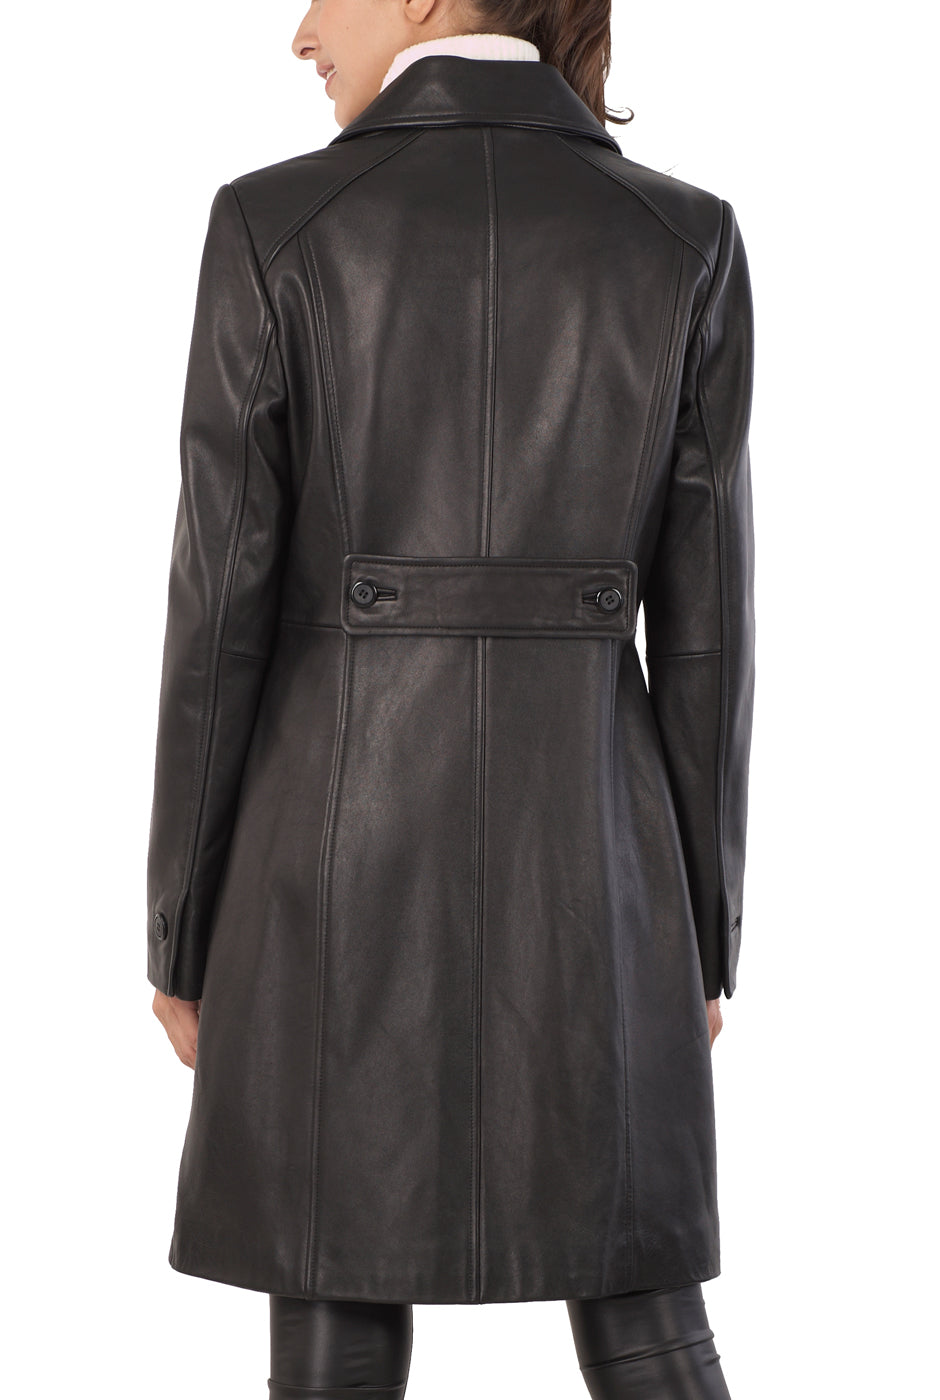 BGSD Women Amber New Zealand Lambskin Leather Walking Coat